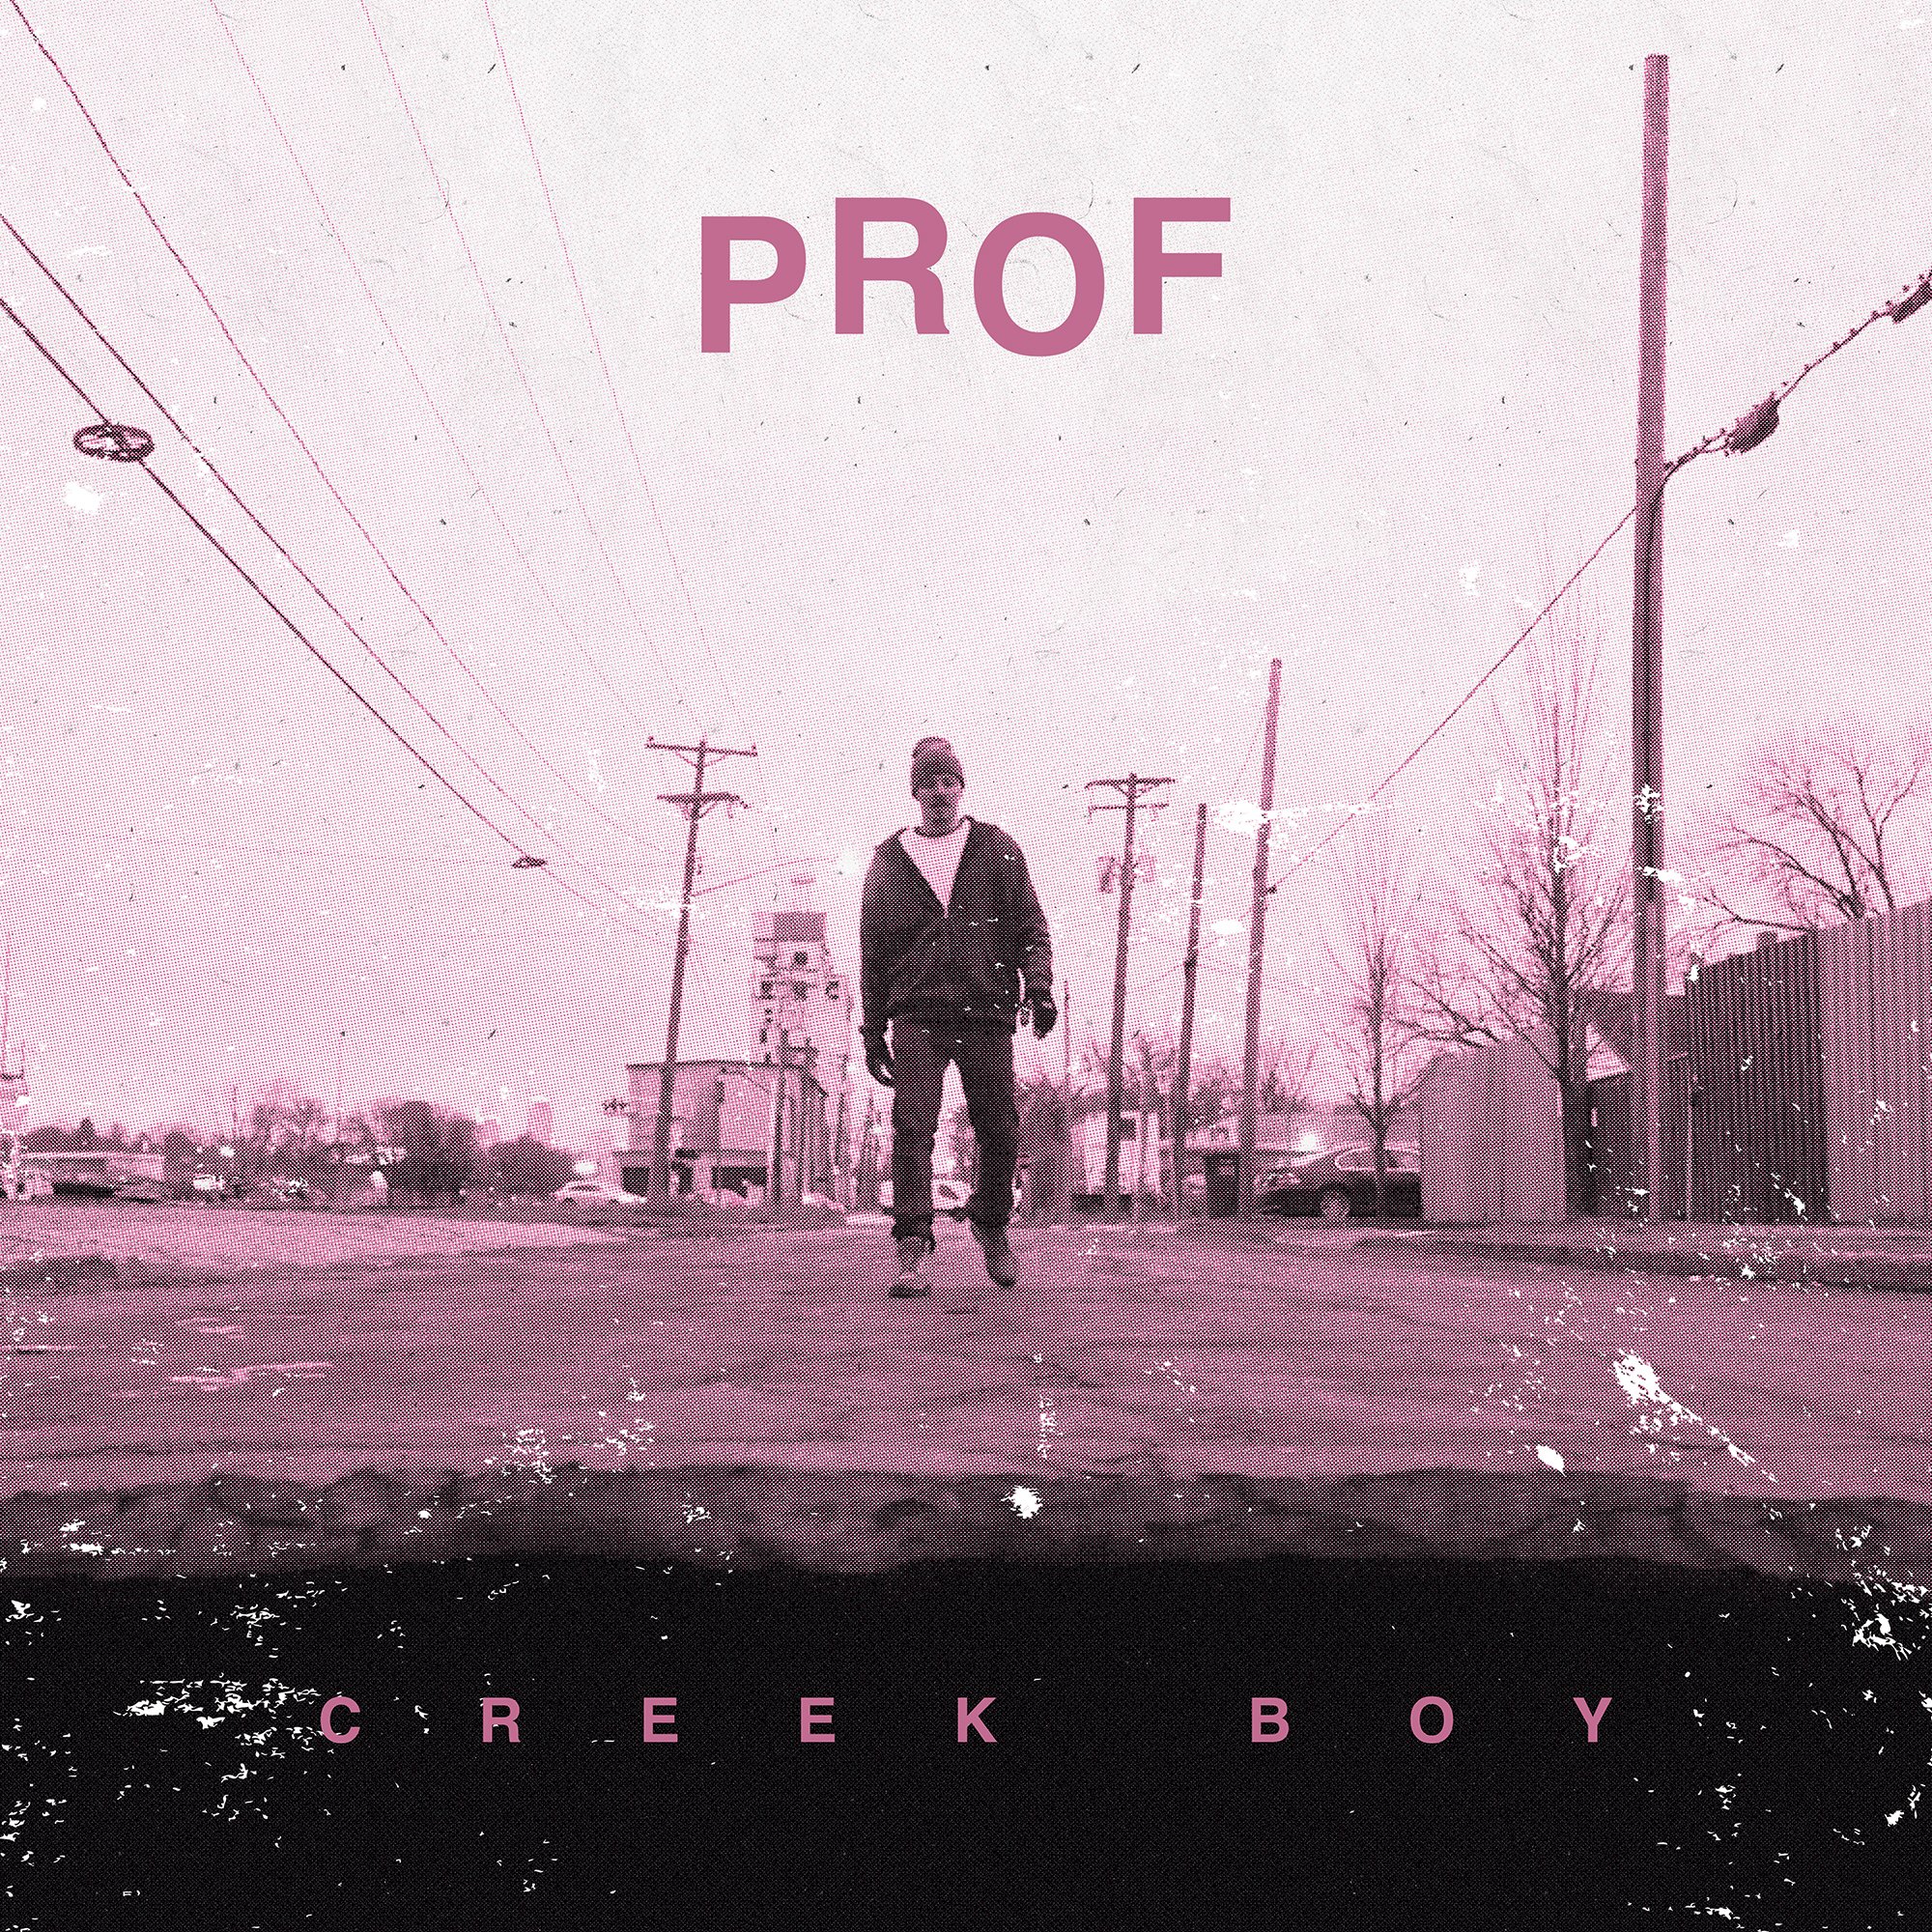 PROF ‘CREEK BOY’ DROPS FRI 3.11